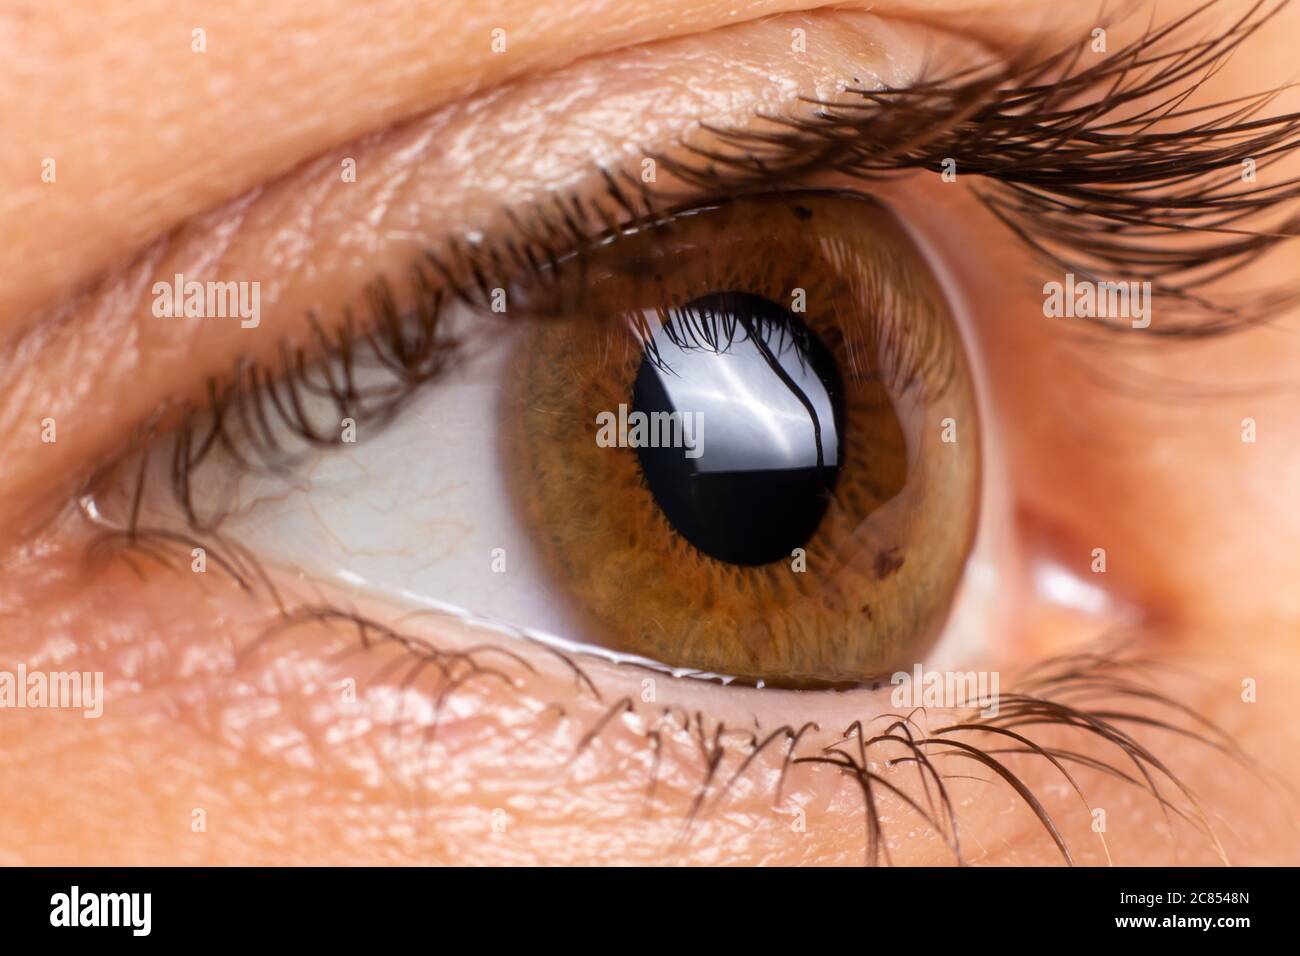 Macro eye photo. Keratoconus - eye disease, thinning of the cornea in the form of a cone. The cornea plastic. Stock Photo